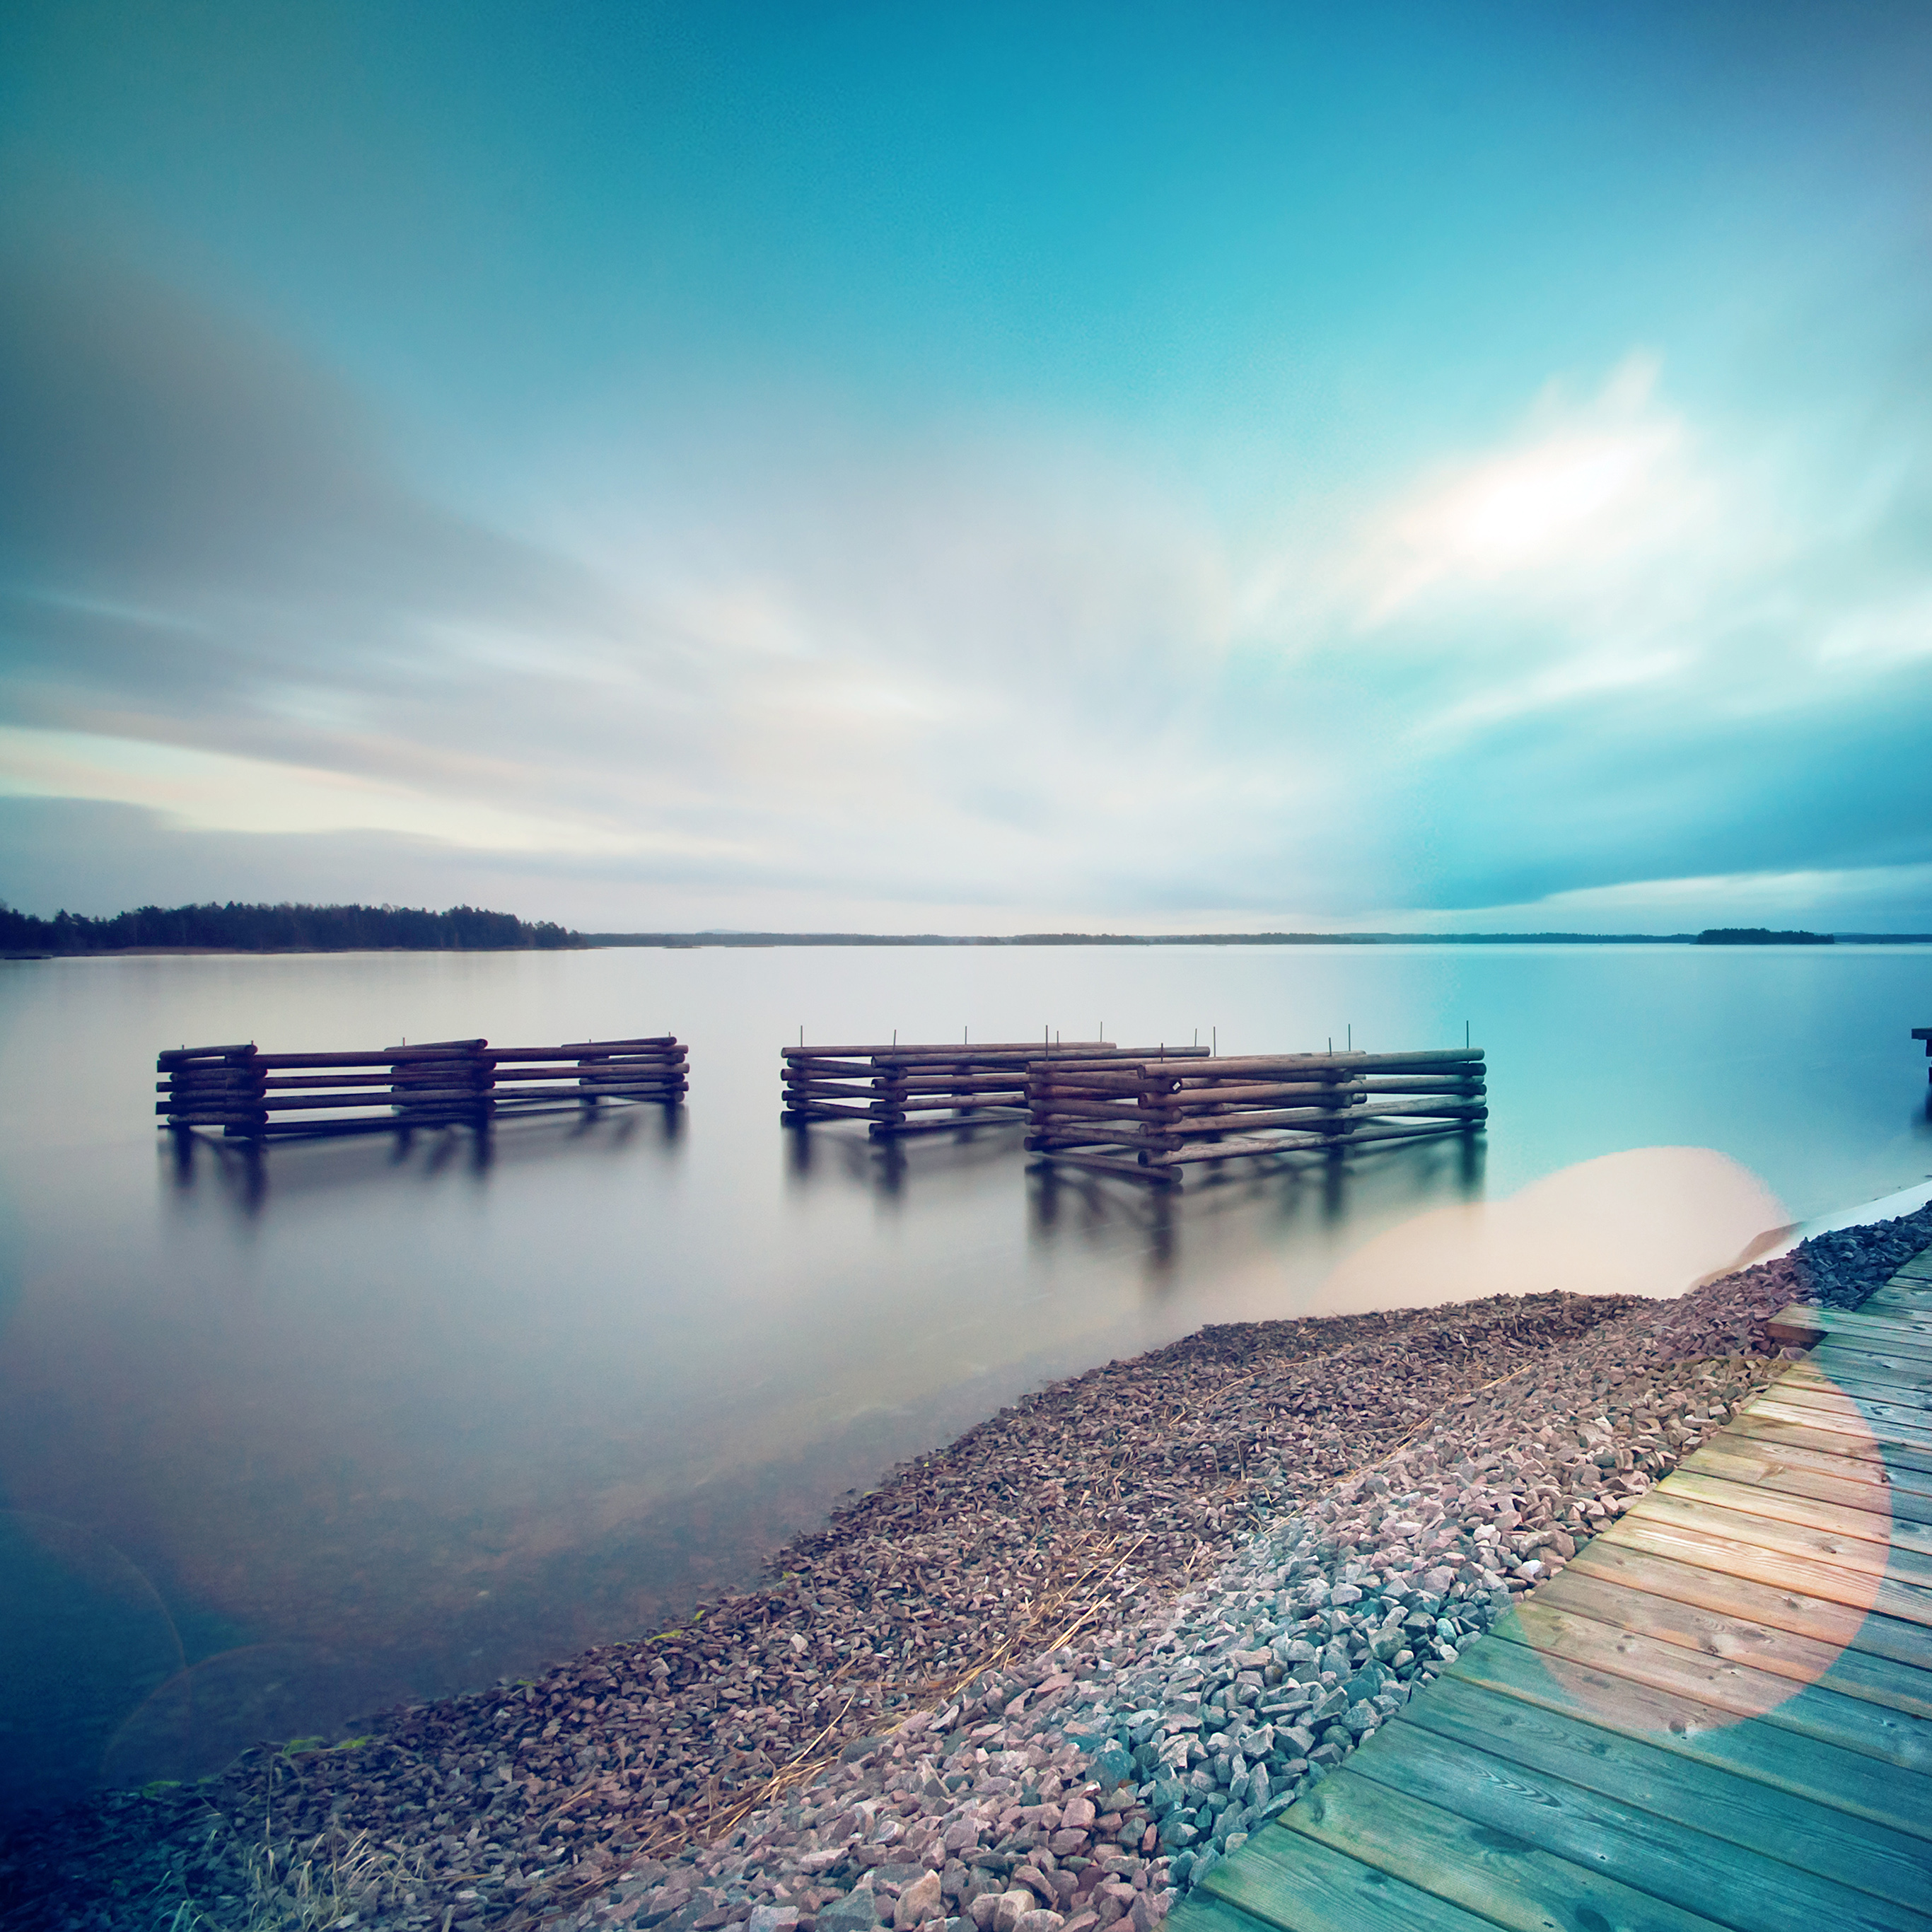 Android wallpaper. lake calm nature beautiful sea water blue flare